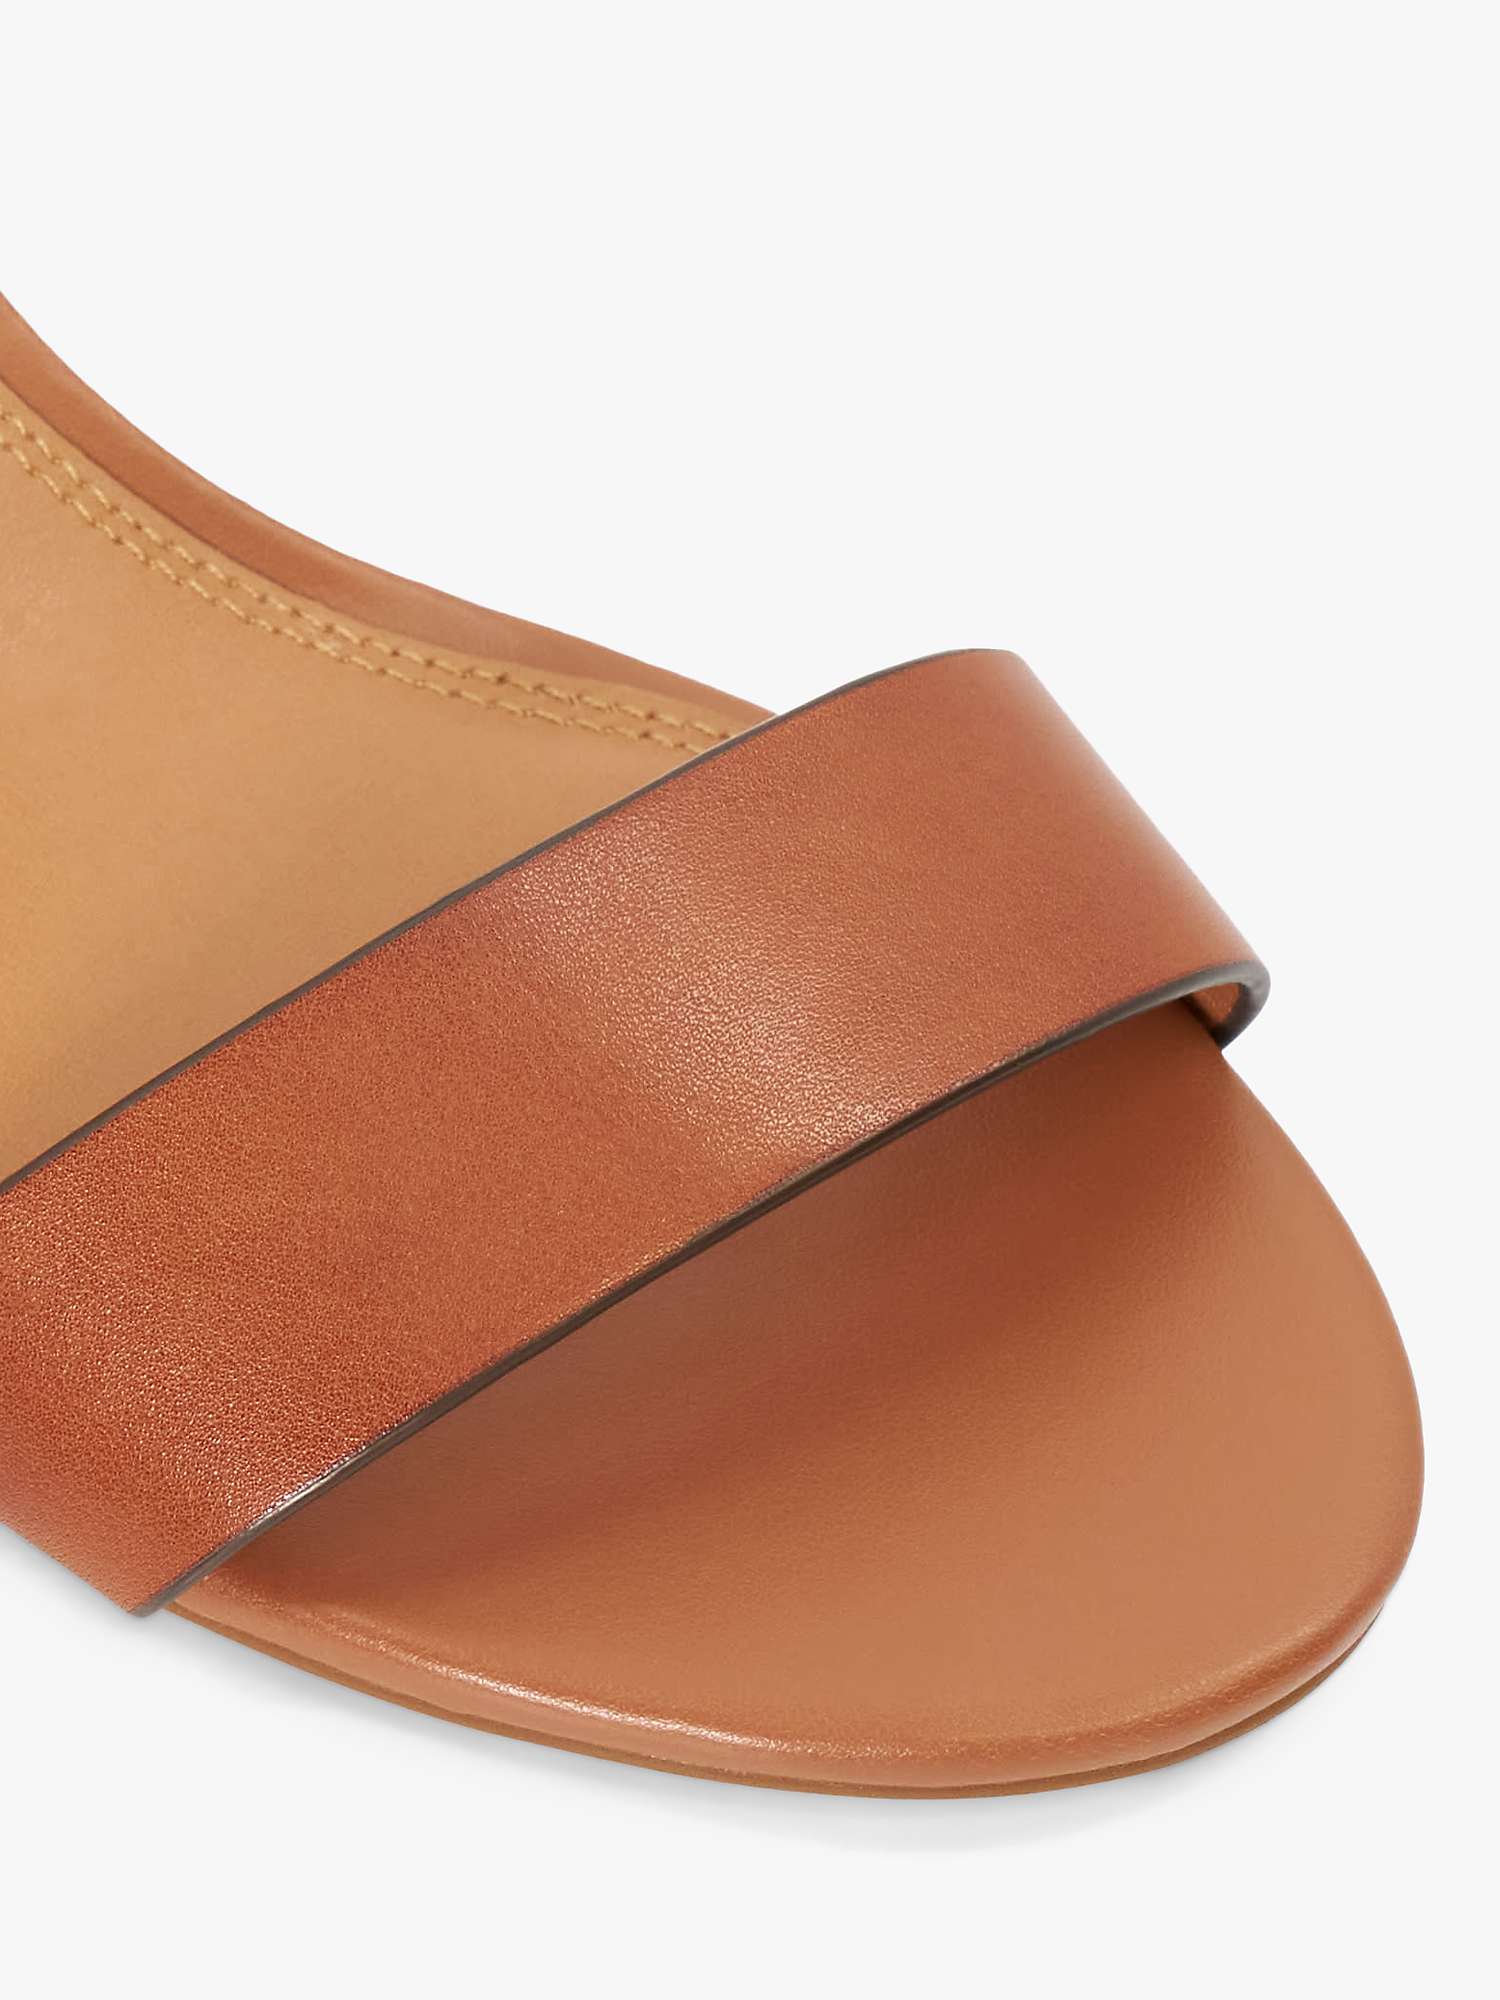 Buy Dune Jelly Leather Block Heel Sandals Online at johnlewis.com